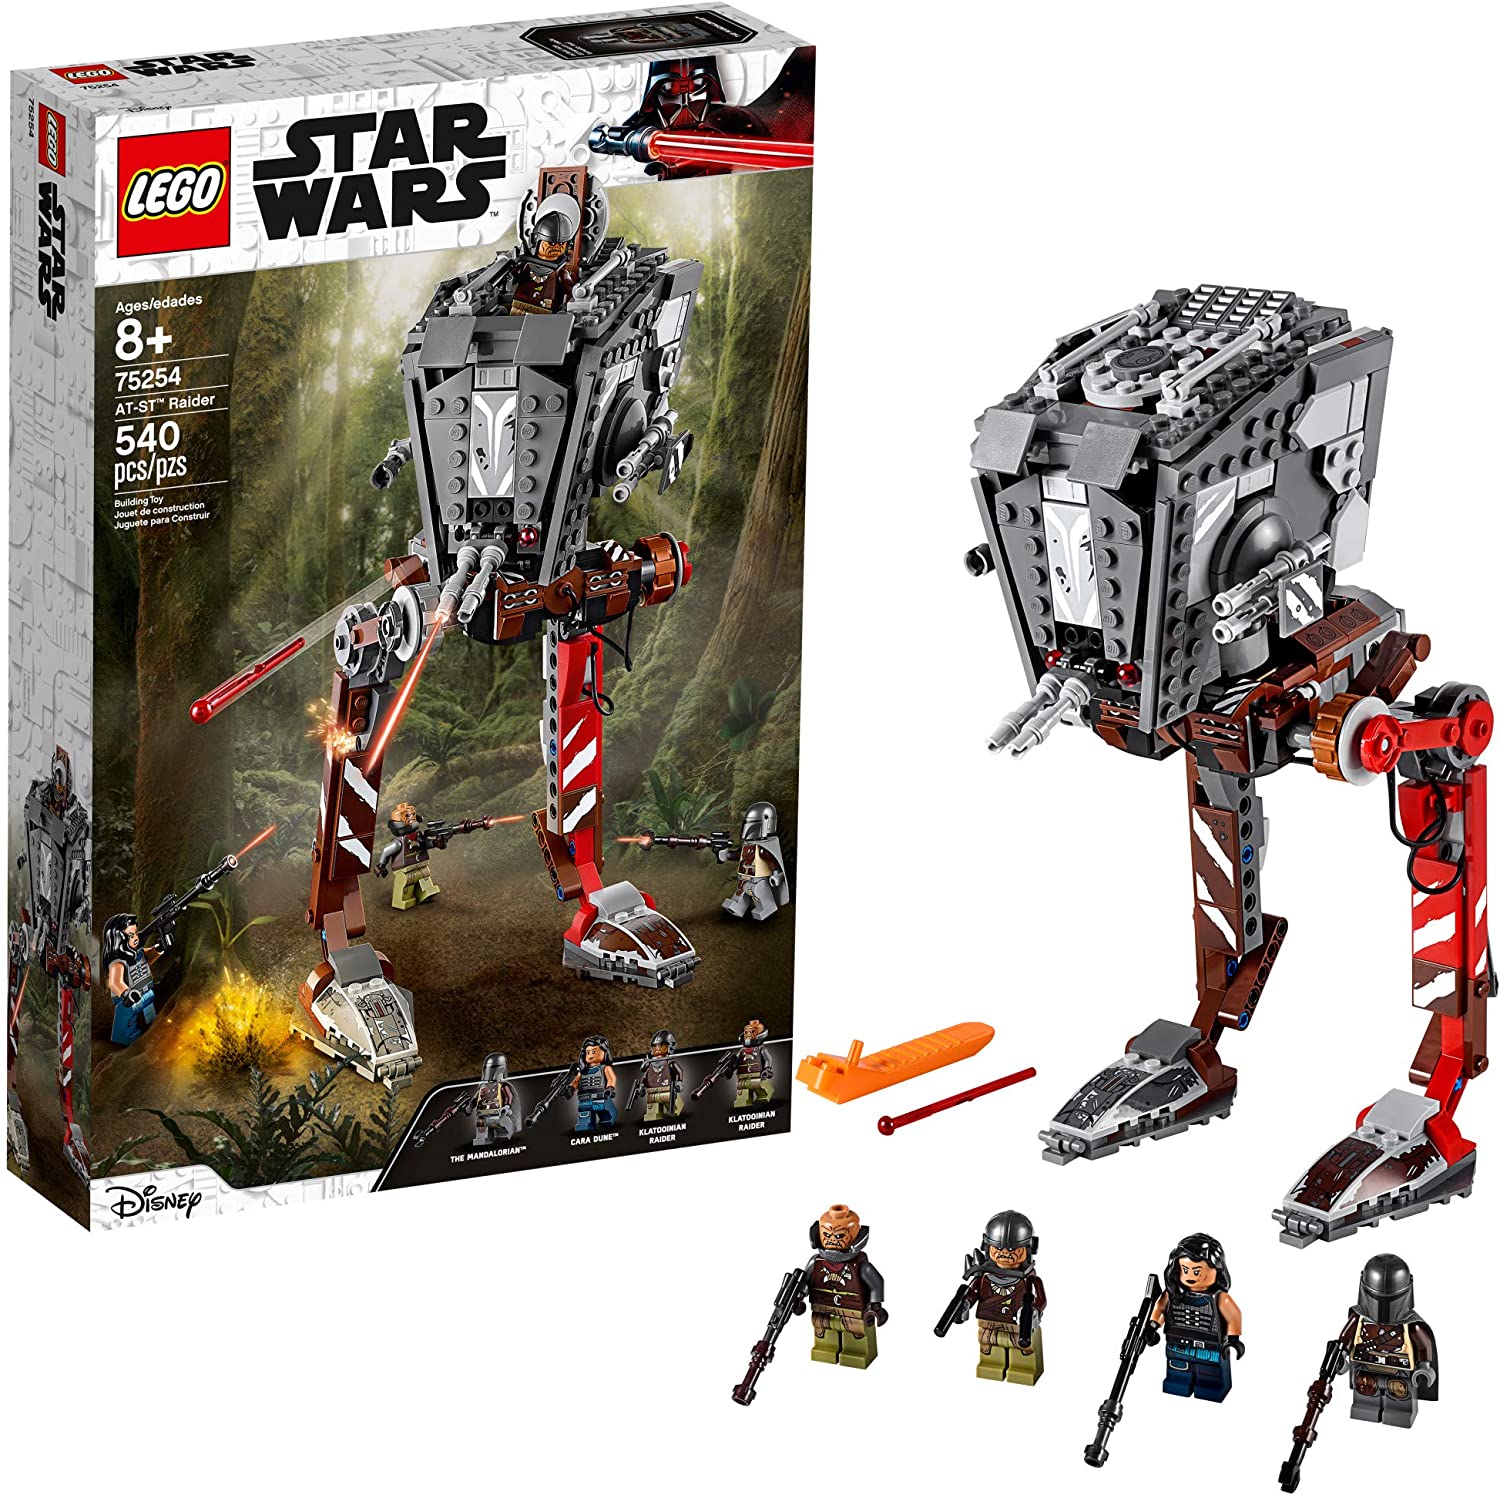 Disney Lego Star Wars 75254 - "The Mandalorian" At-St Walker-540 Pieces